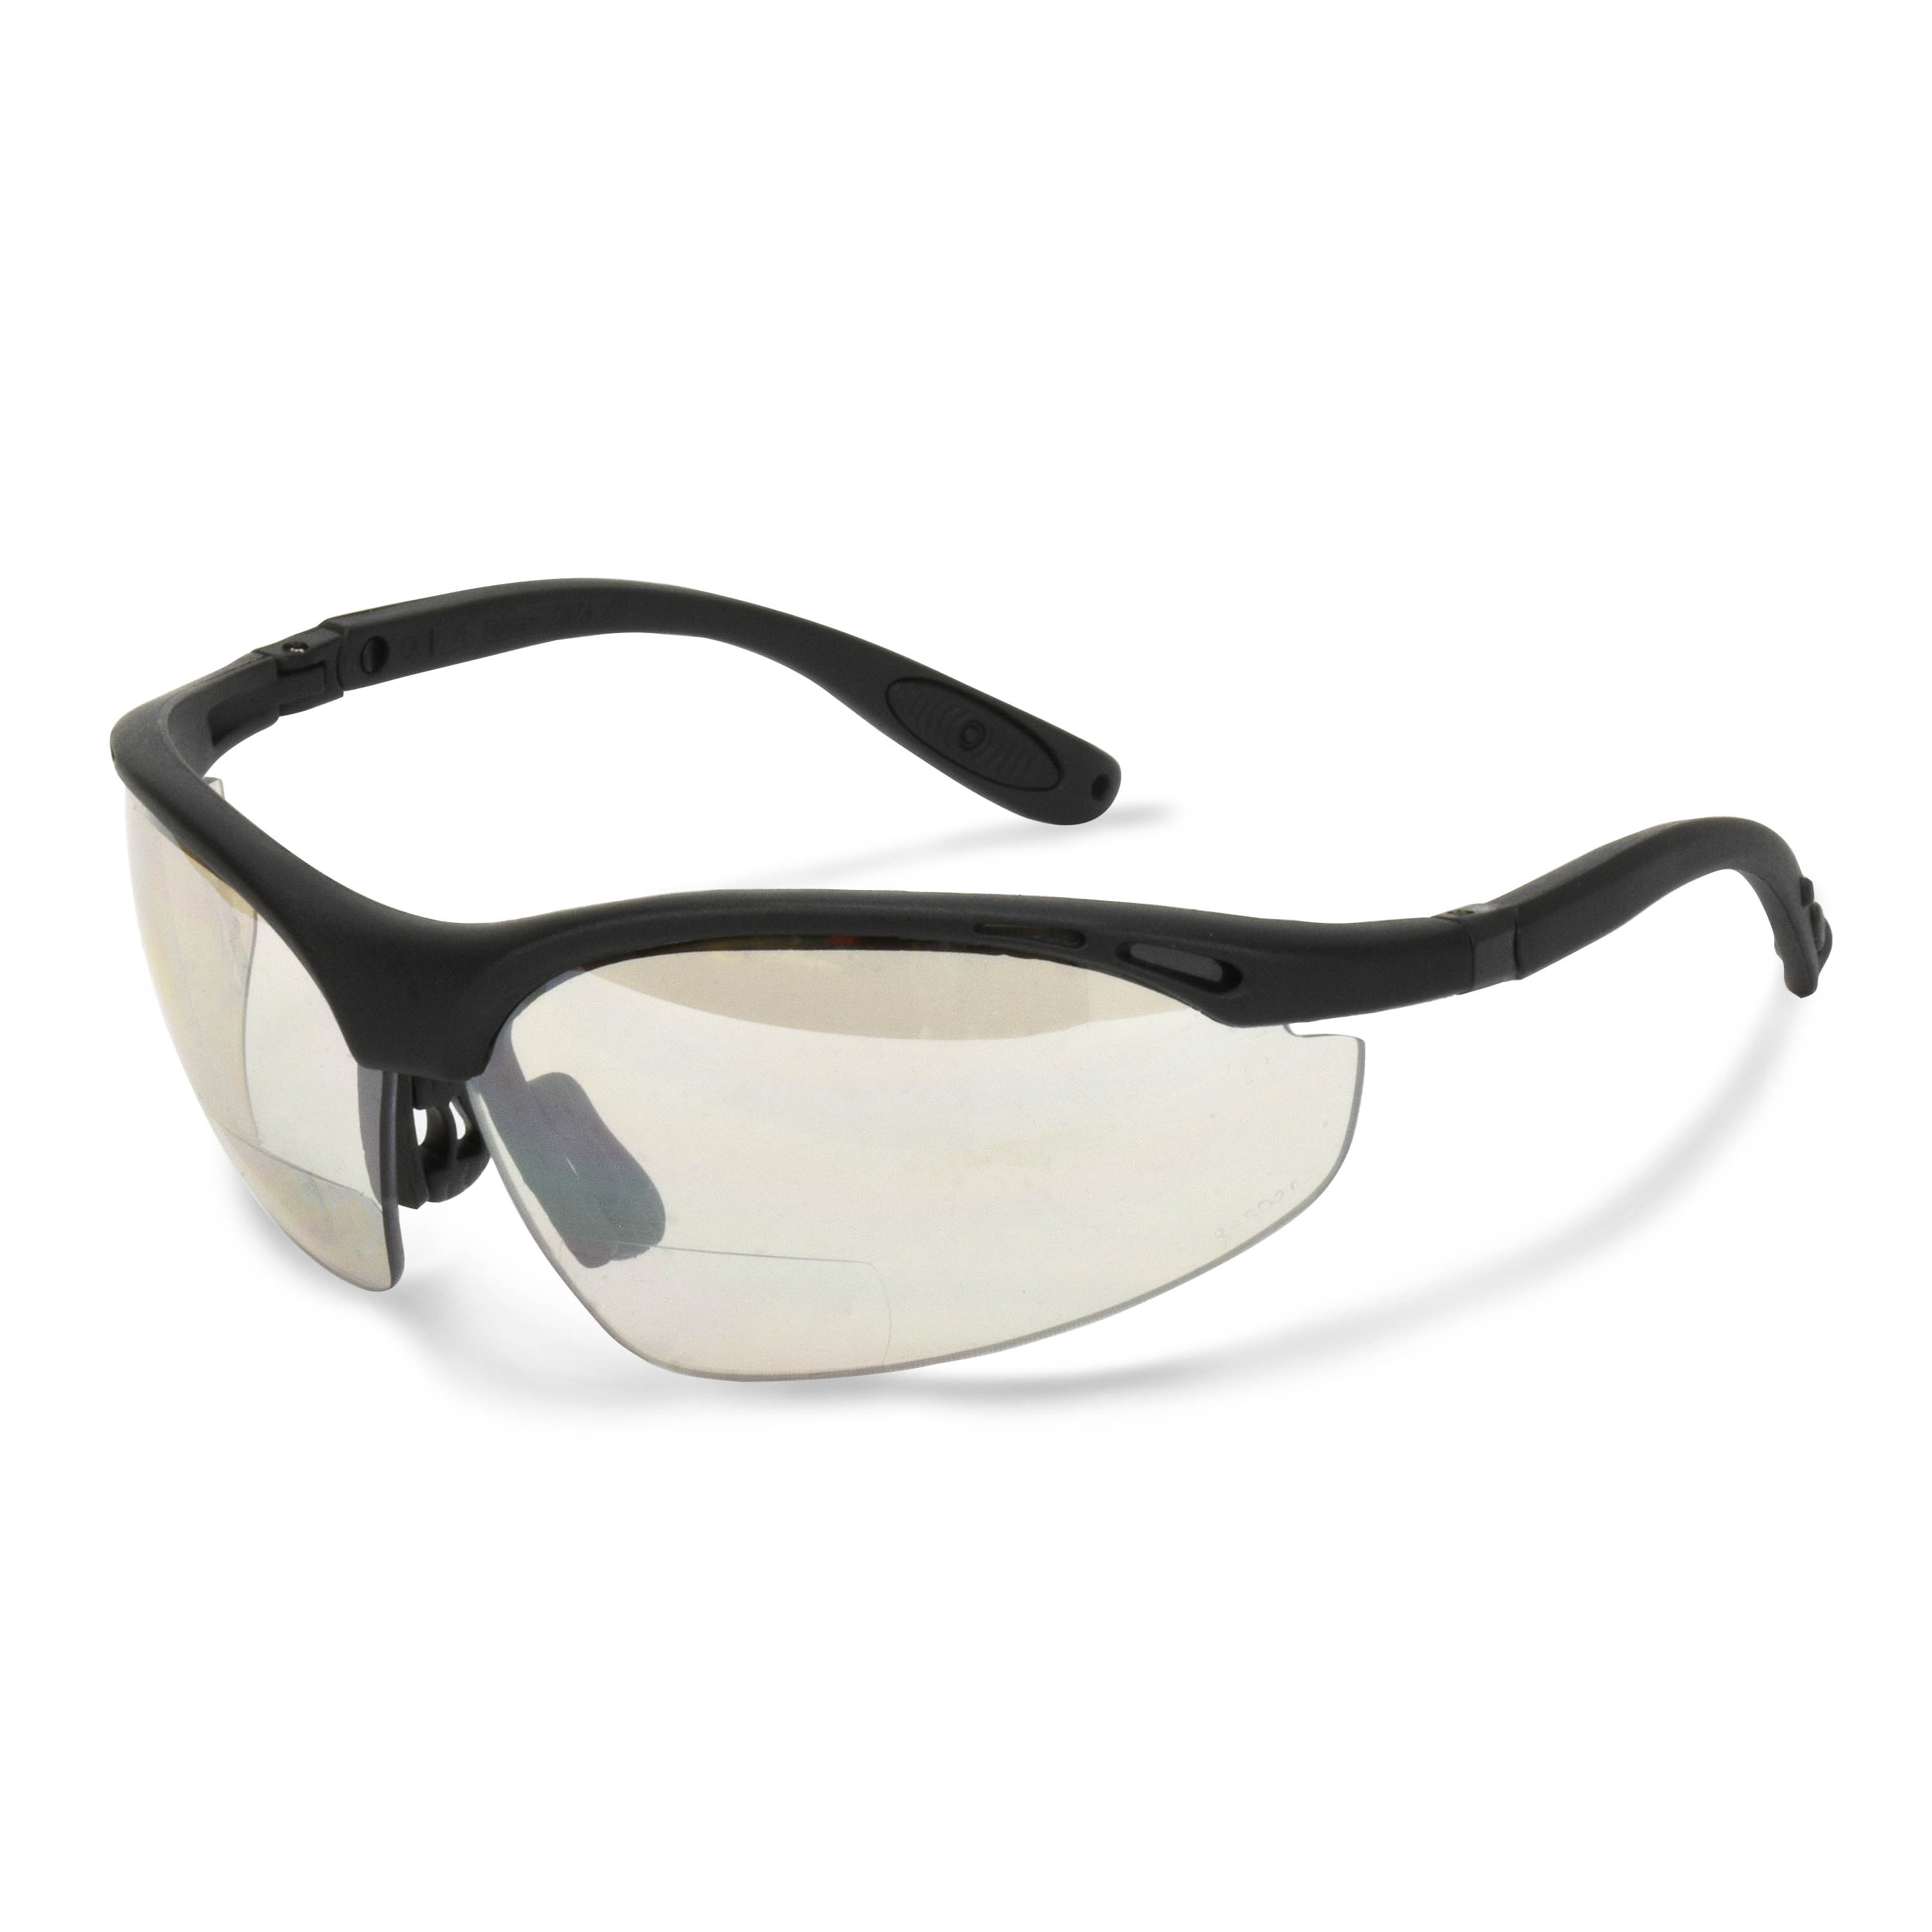 Cheaters® Bi-Focal Eyewear - Black Frame - Indoor/Outdoor Lens - 2.0 Diopter